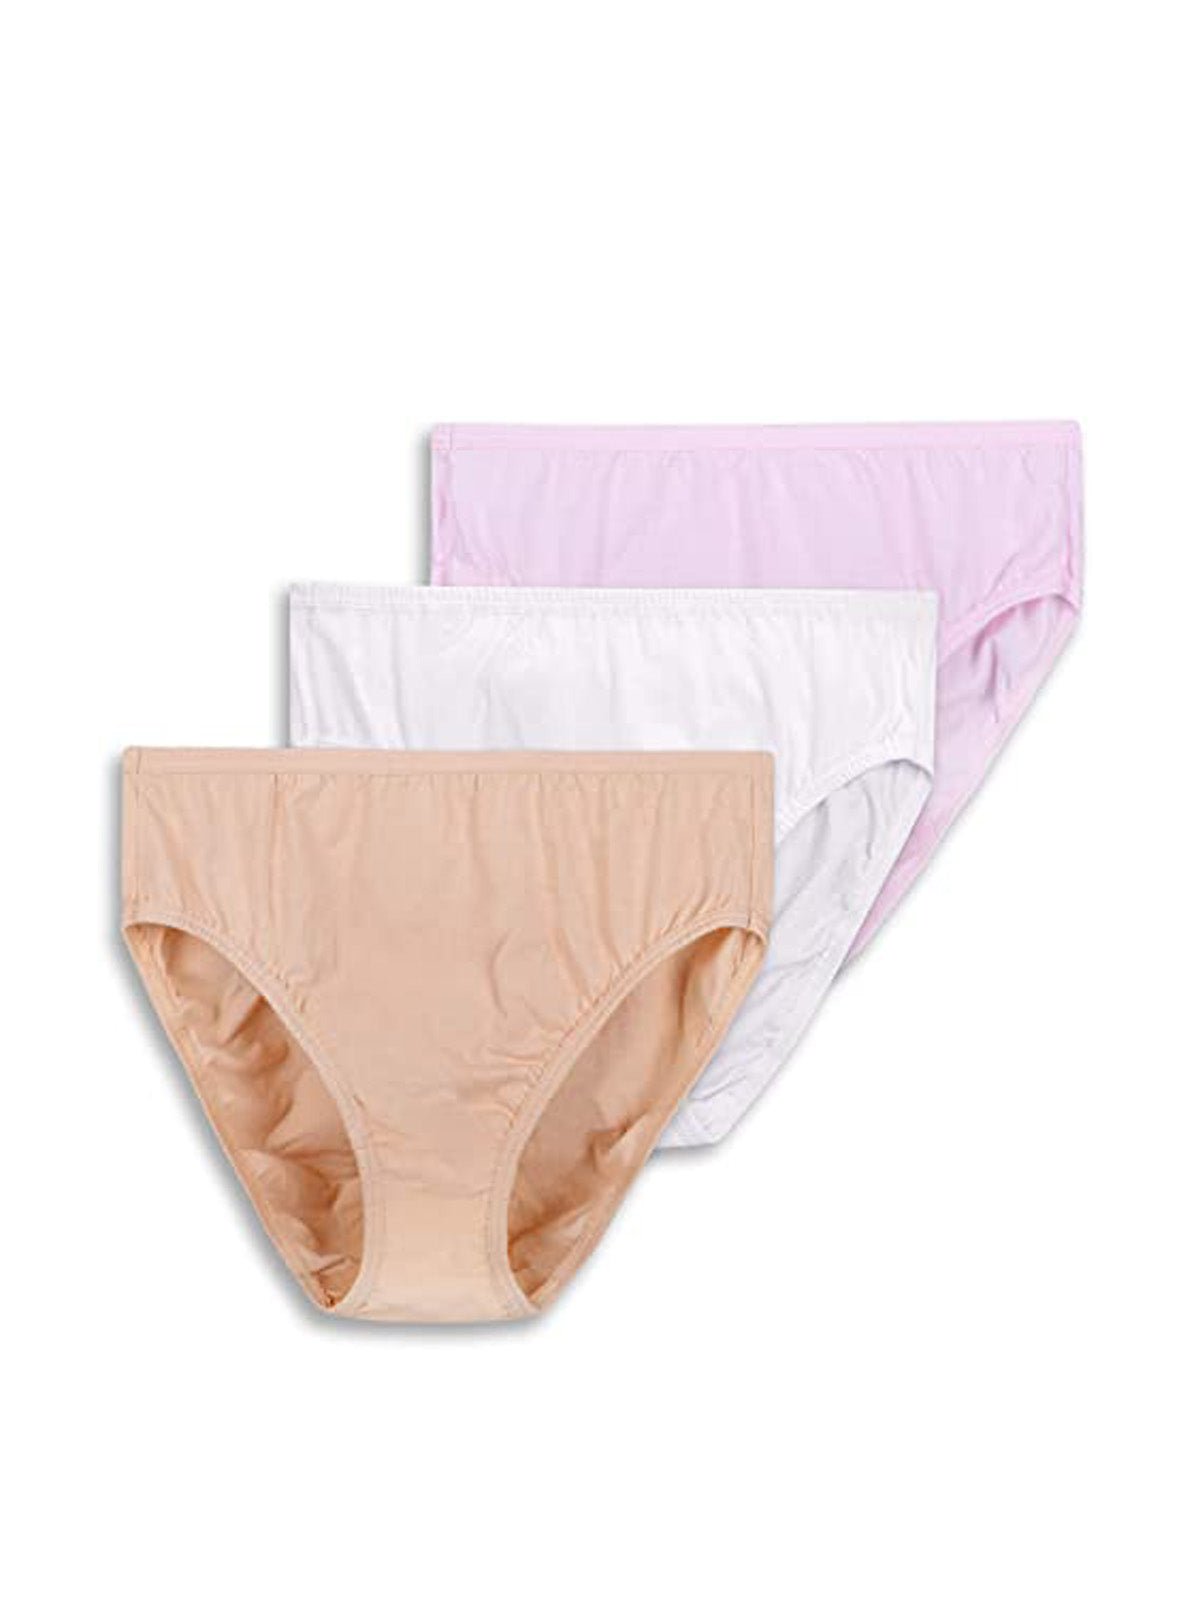 LBECLEY Women's Underwear Cotton High Cut Womens Underpants